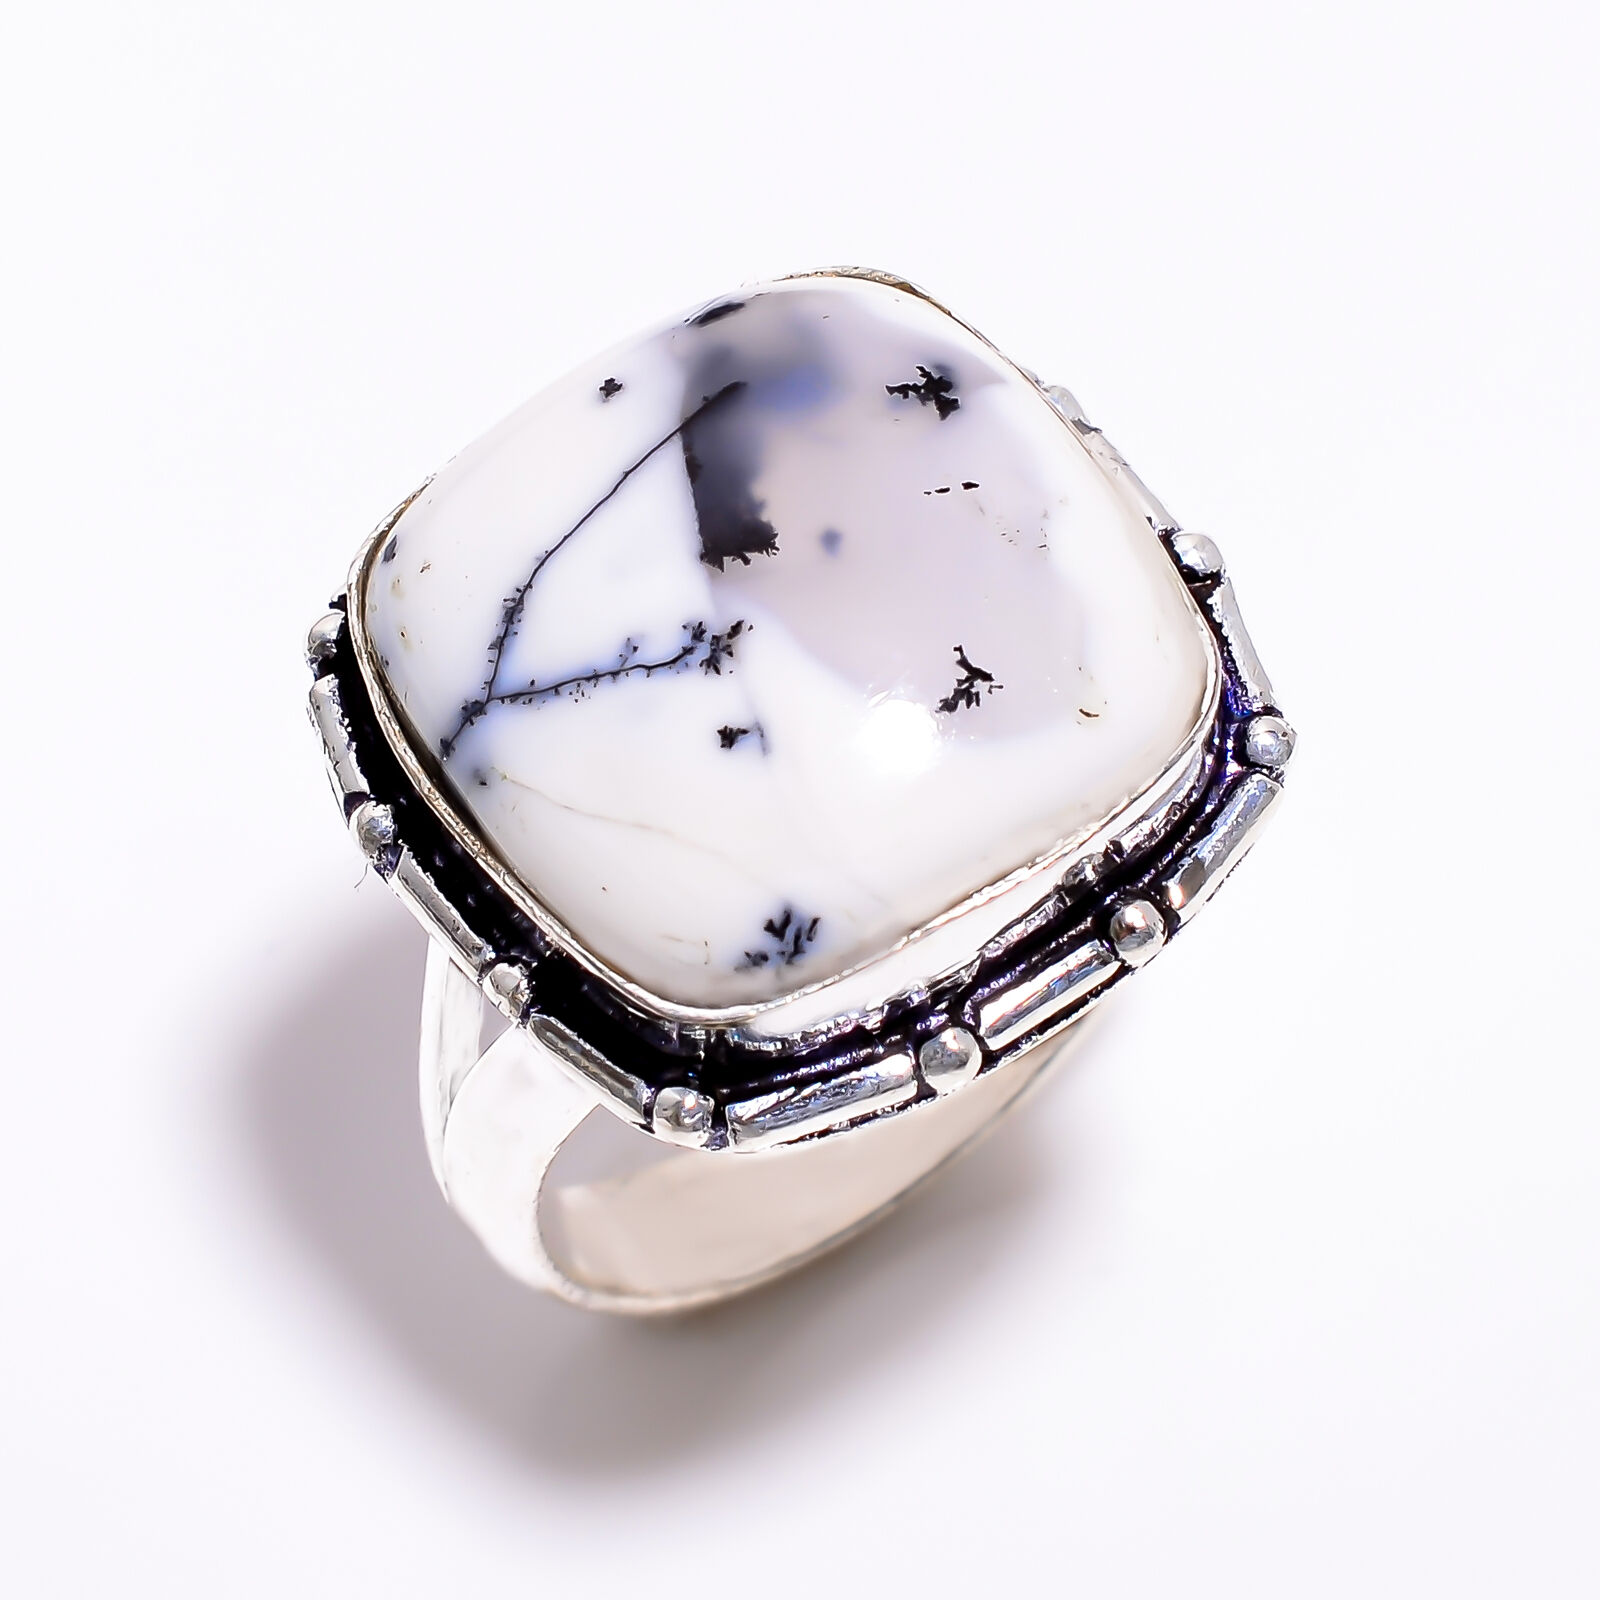 Dendrite Opal Vintage Handmade Jewelry 925 Sterling Silver Ring 8.5 US GSR-192